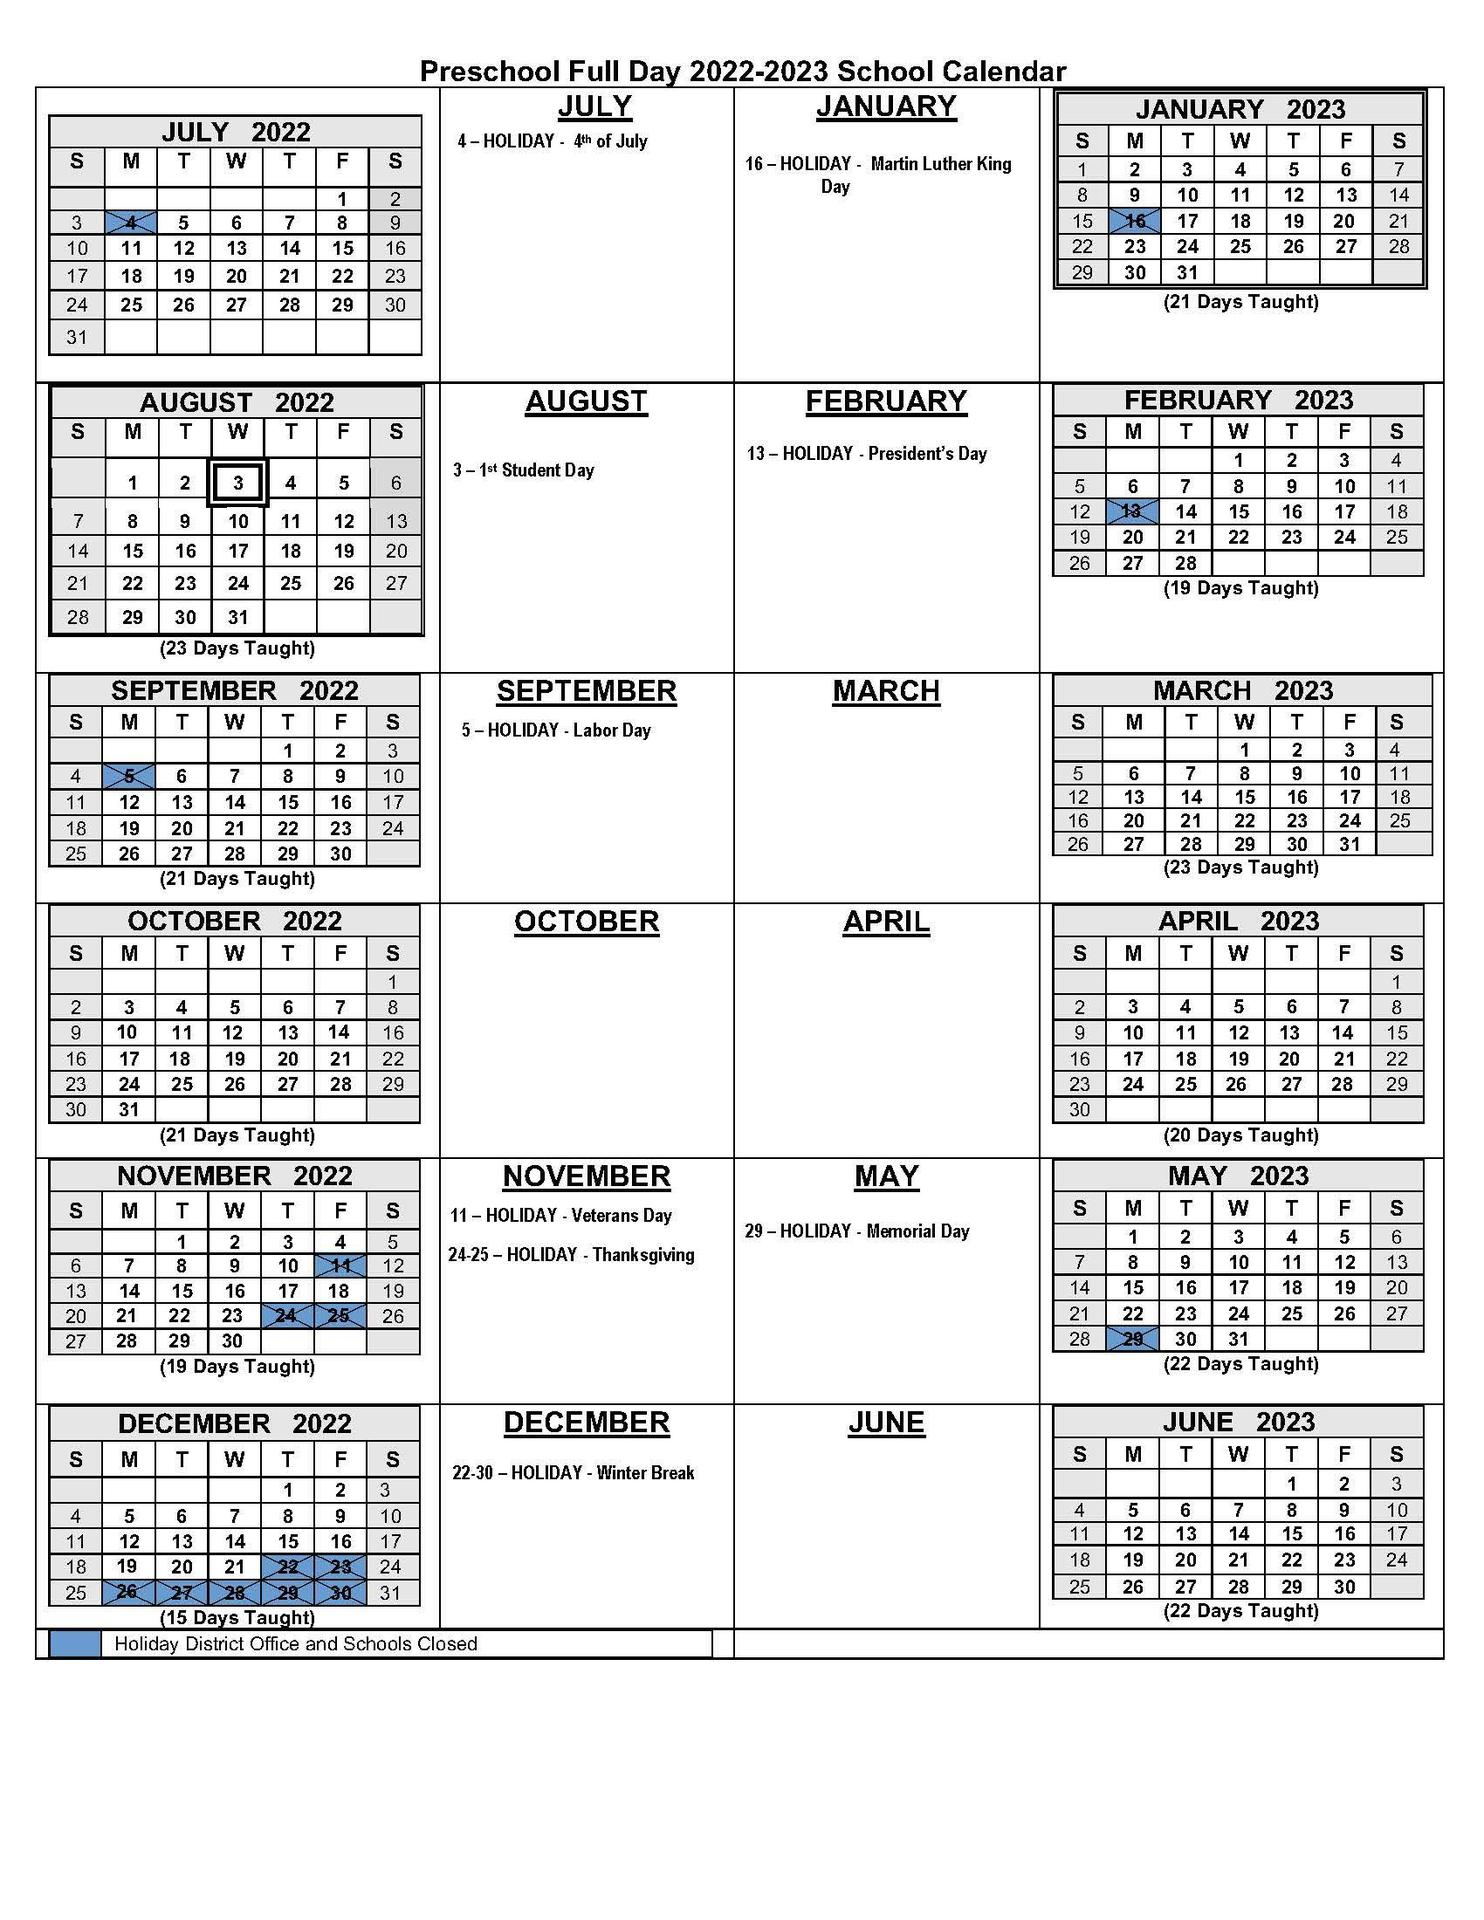 Sweetwater School District Calendar 2022-2023 2022 - Schoolcalendars.net